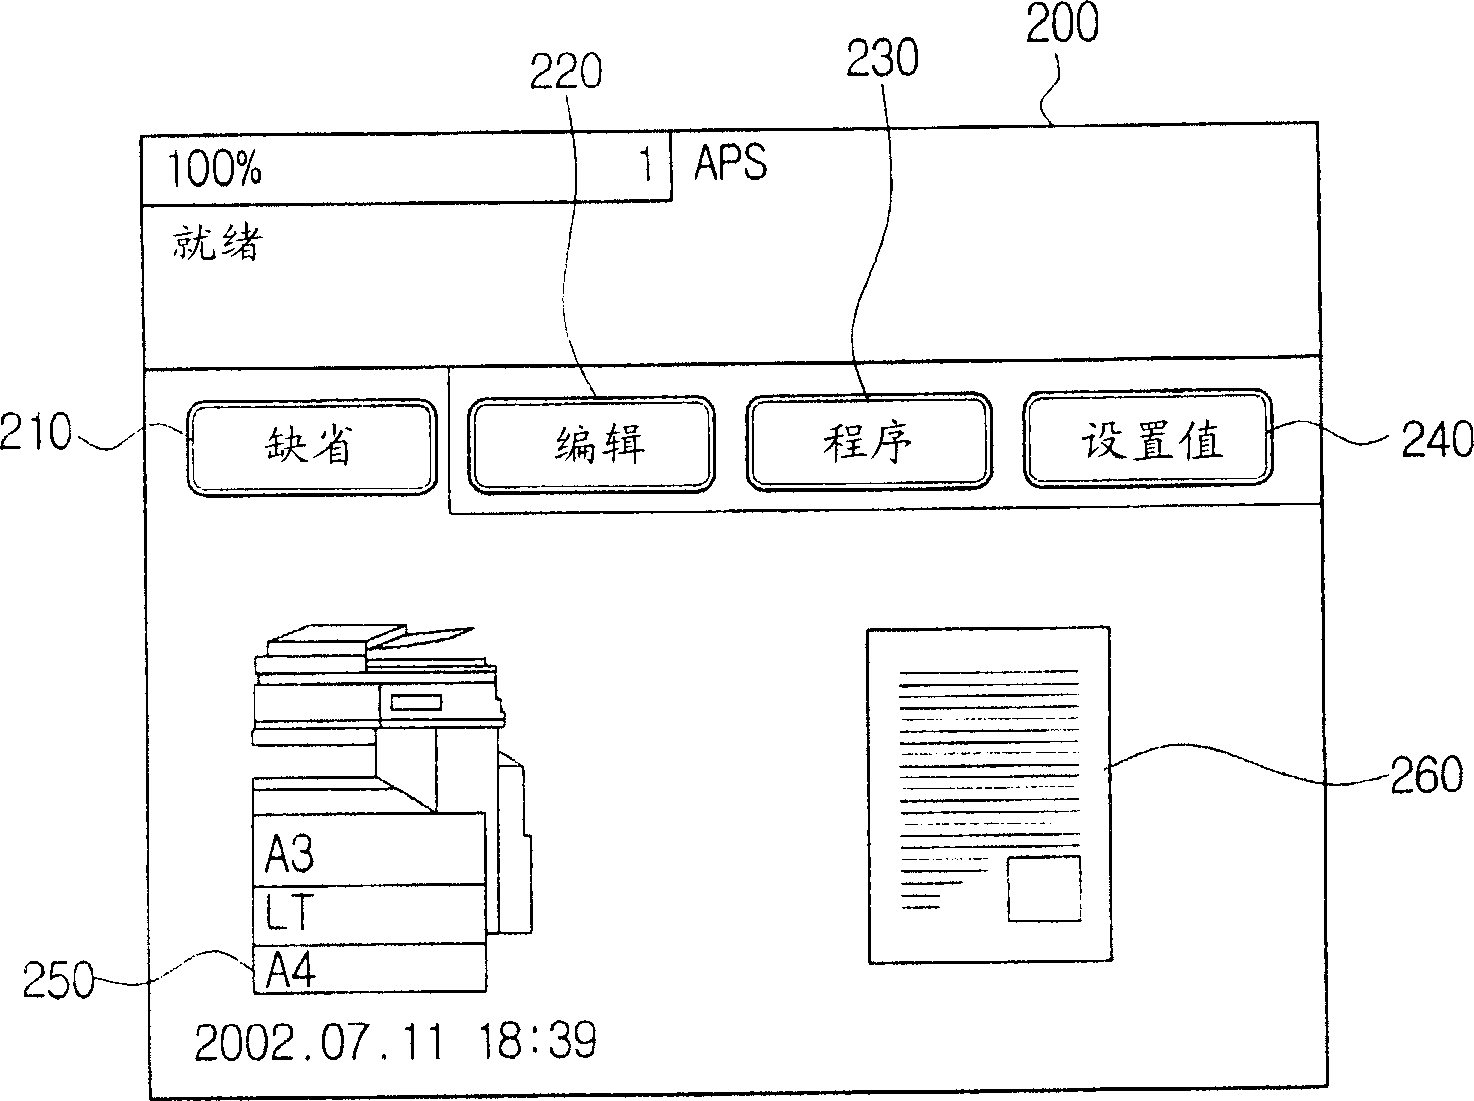 Digital copier and display control method